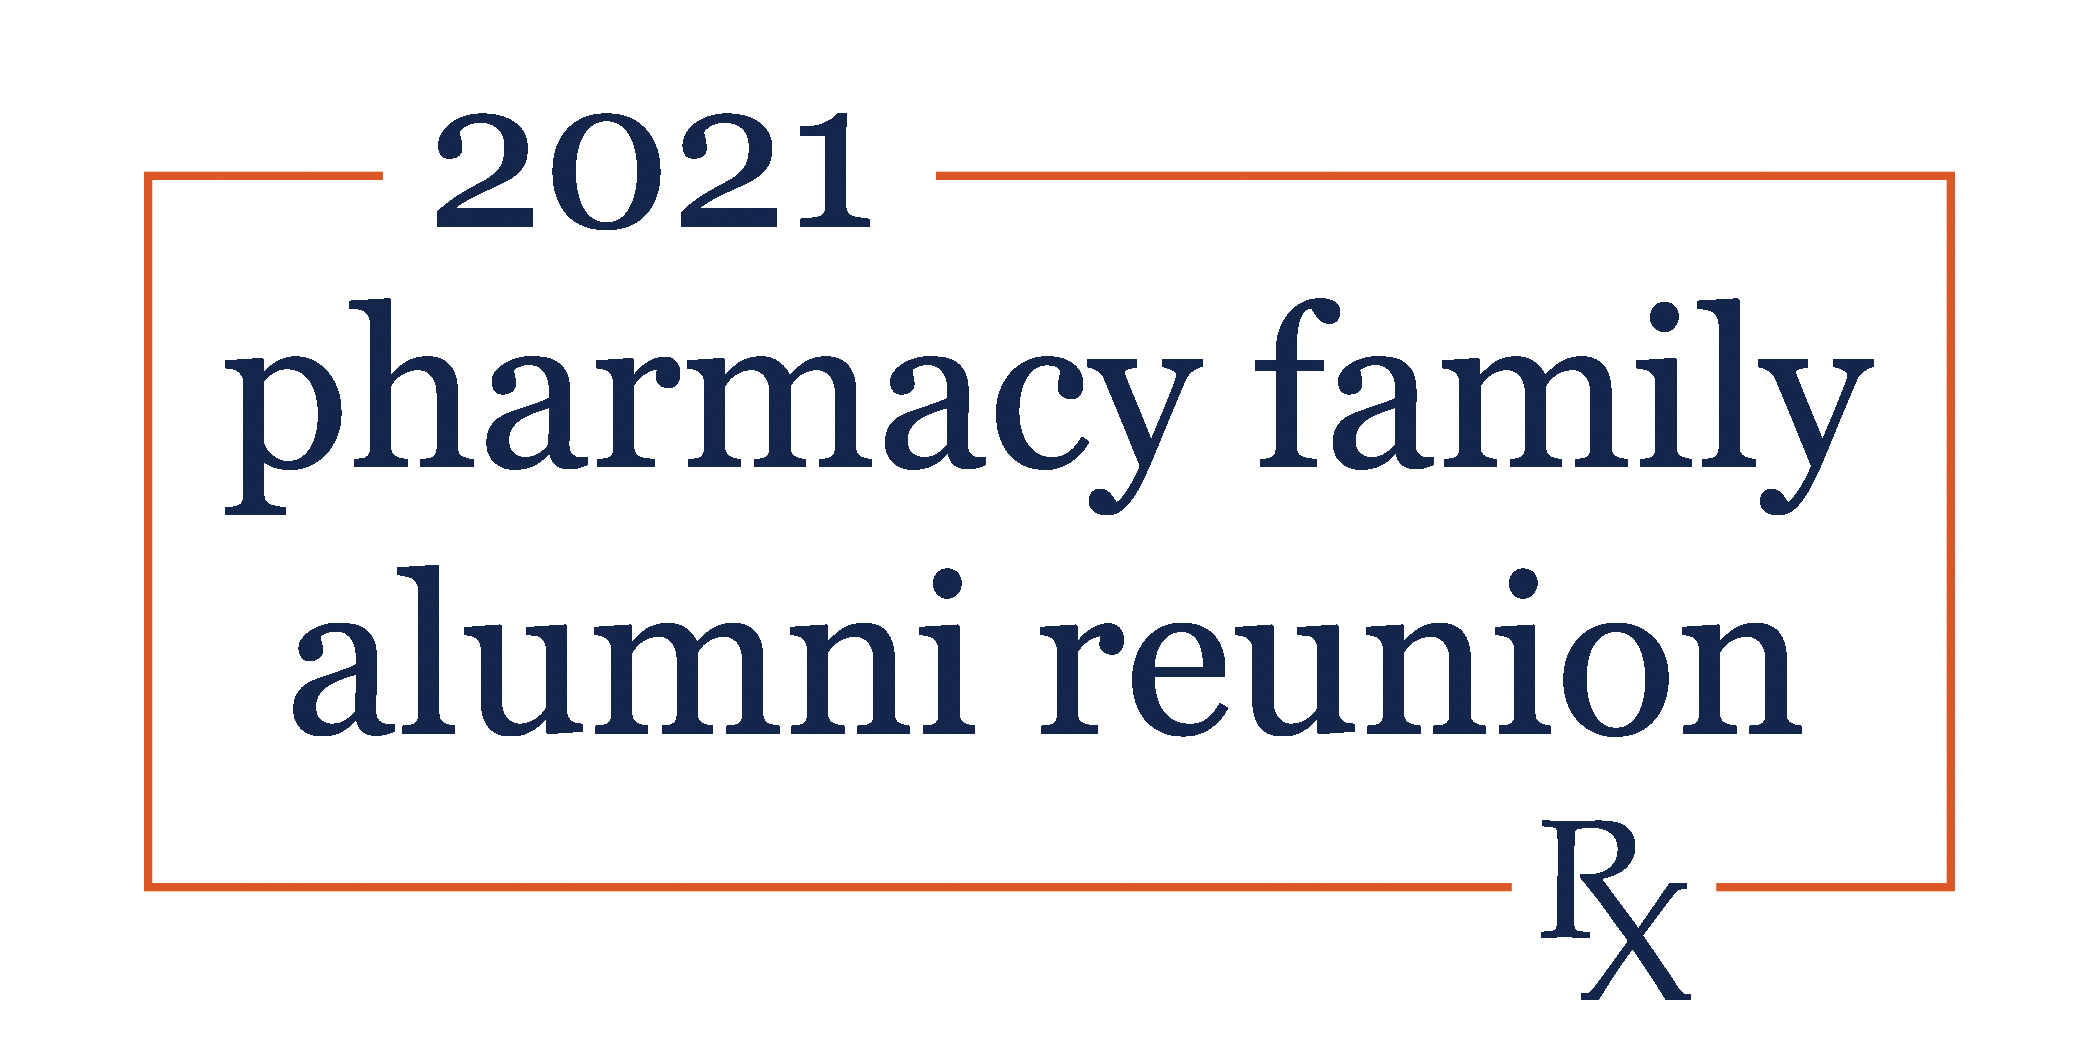 2021 pharmacy family reunion text